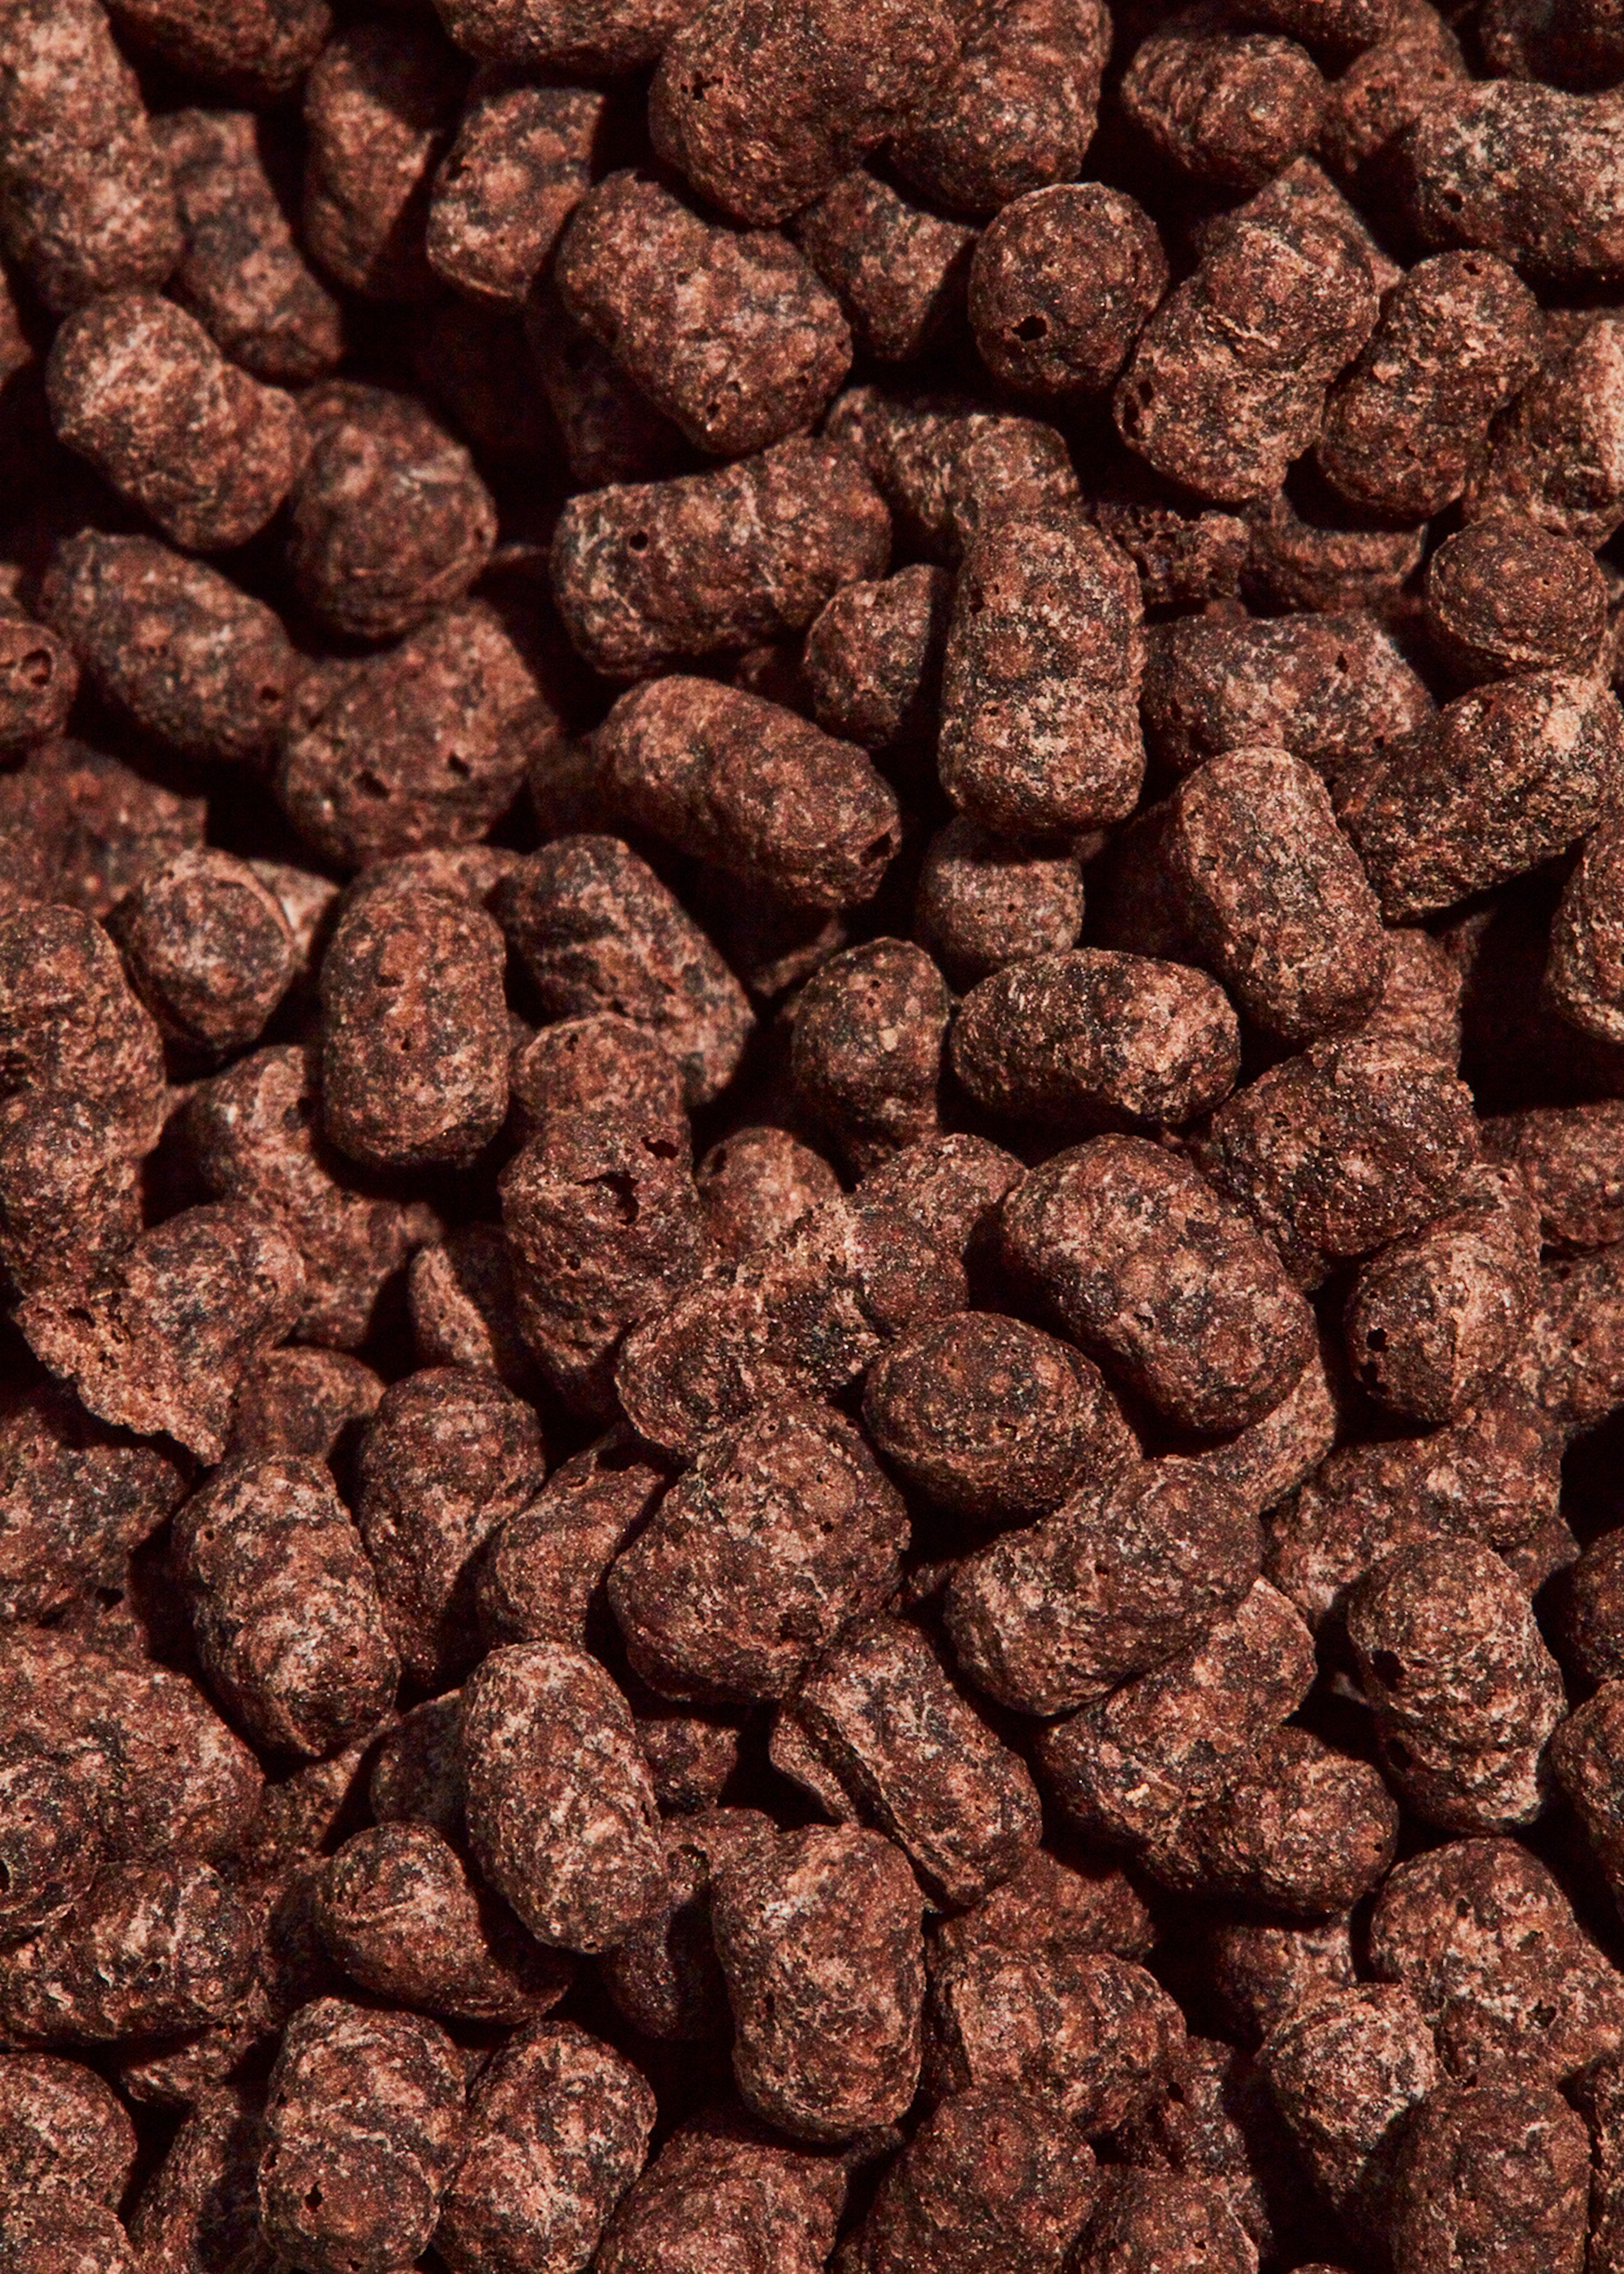 Koro Drogerie Crispies de cacao au soja